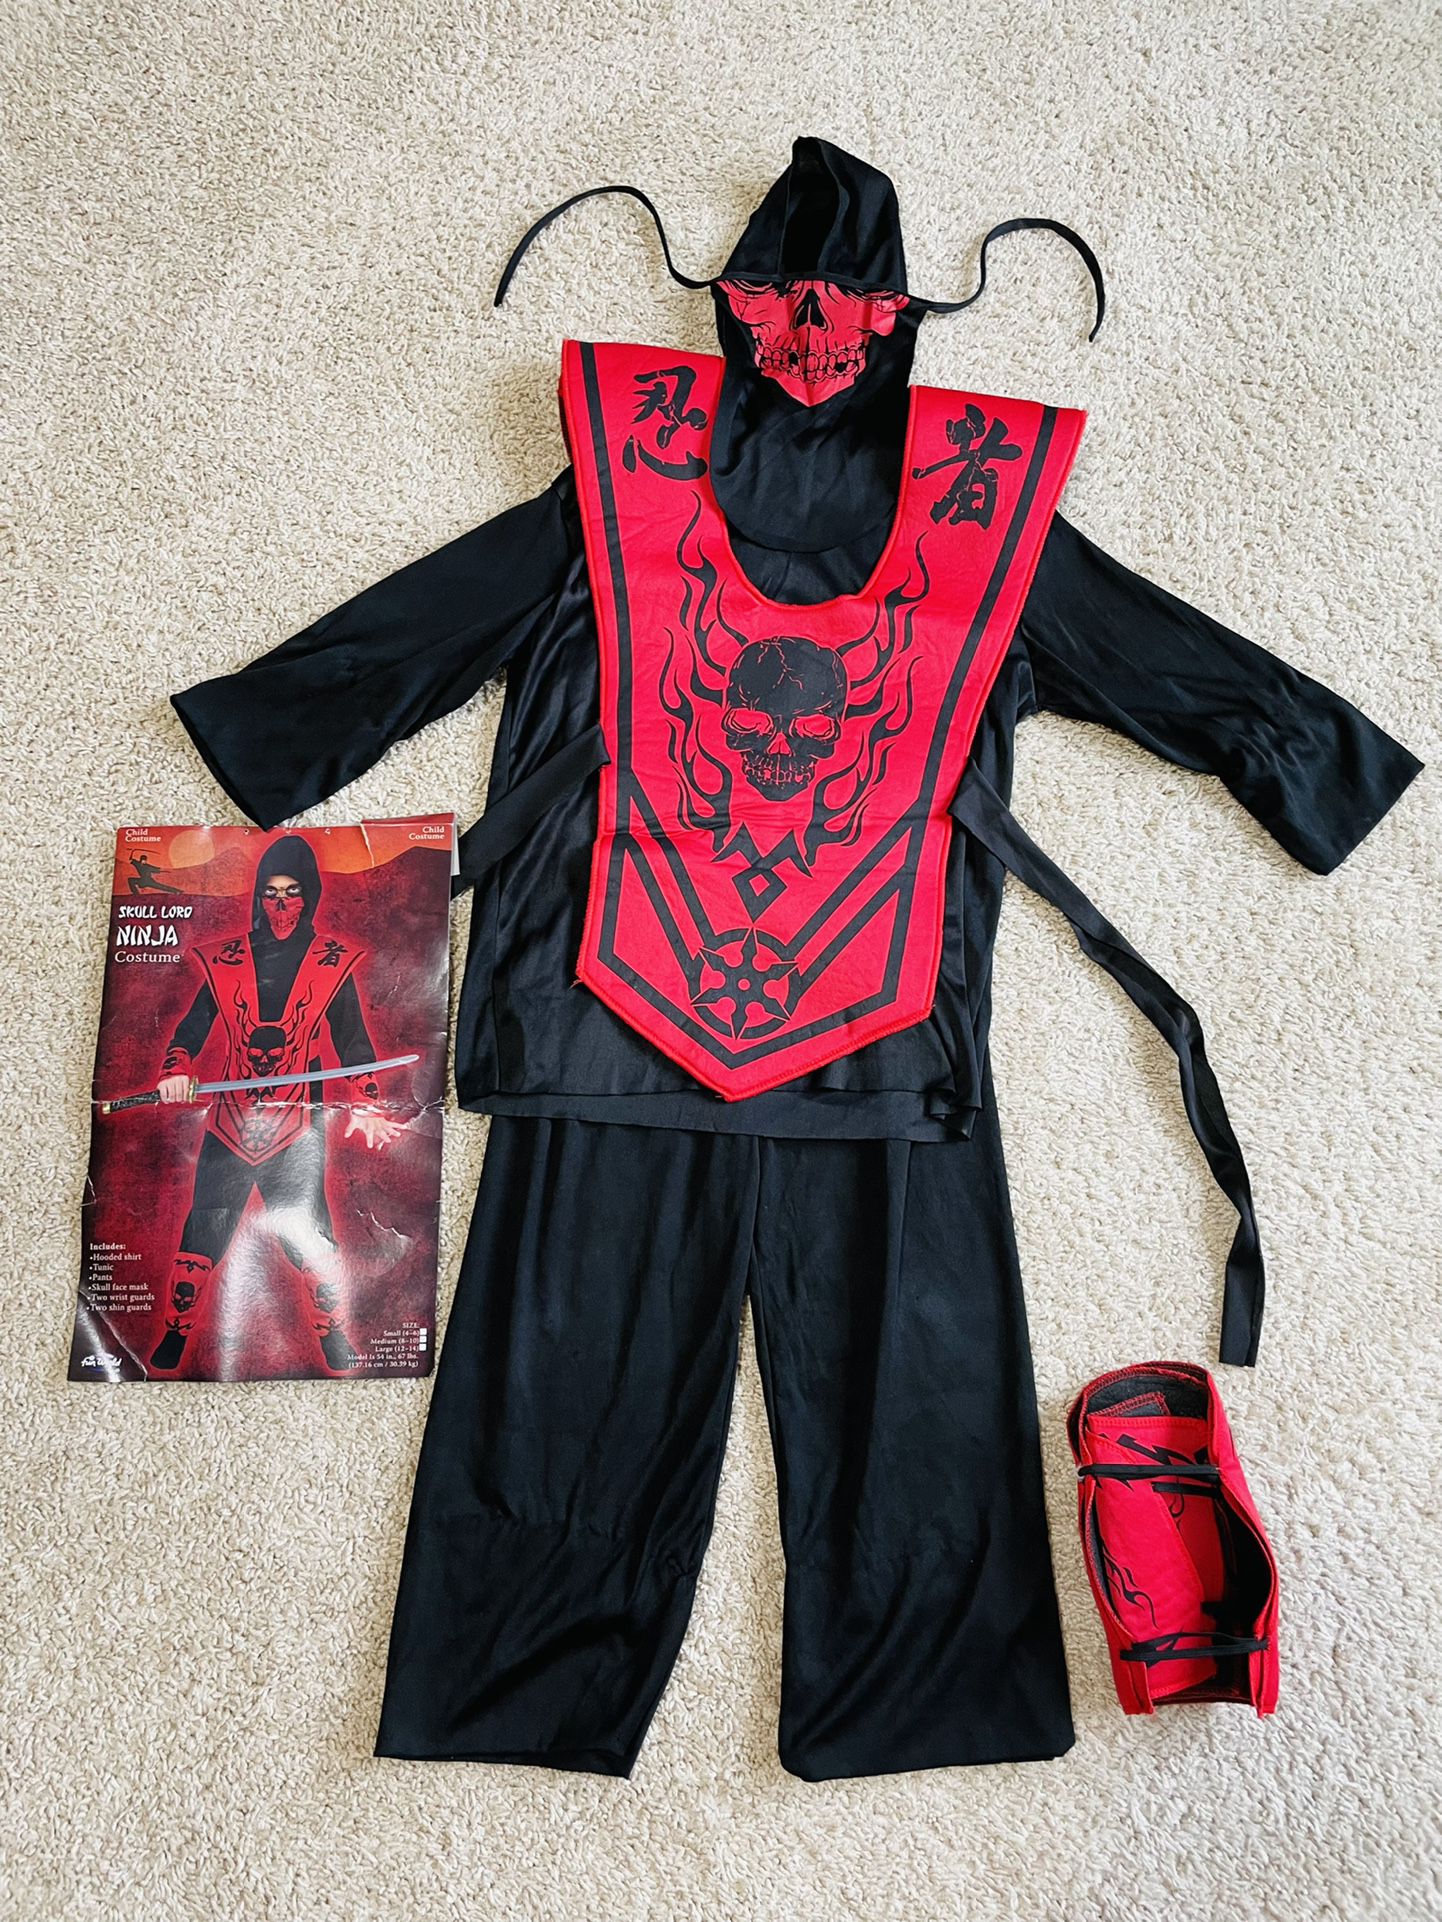 Skull Lord Ninja Costume For Kids Size 8-10